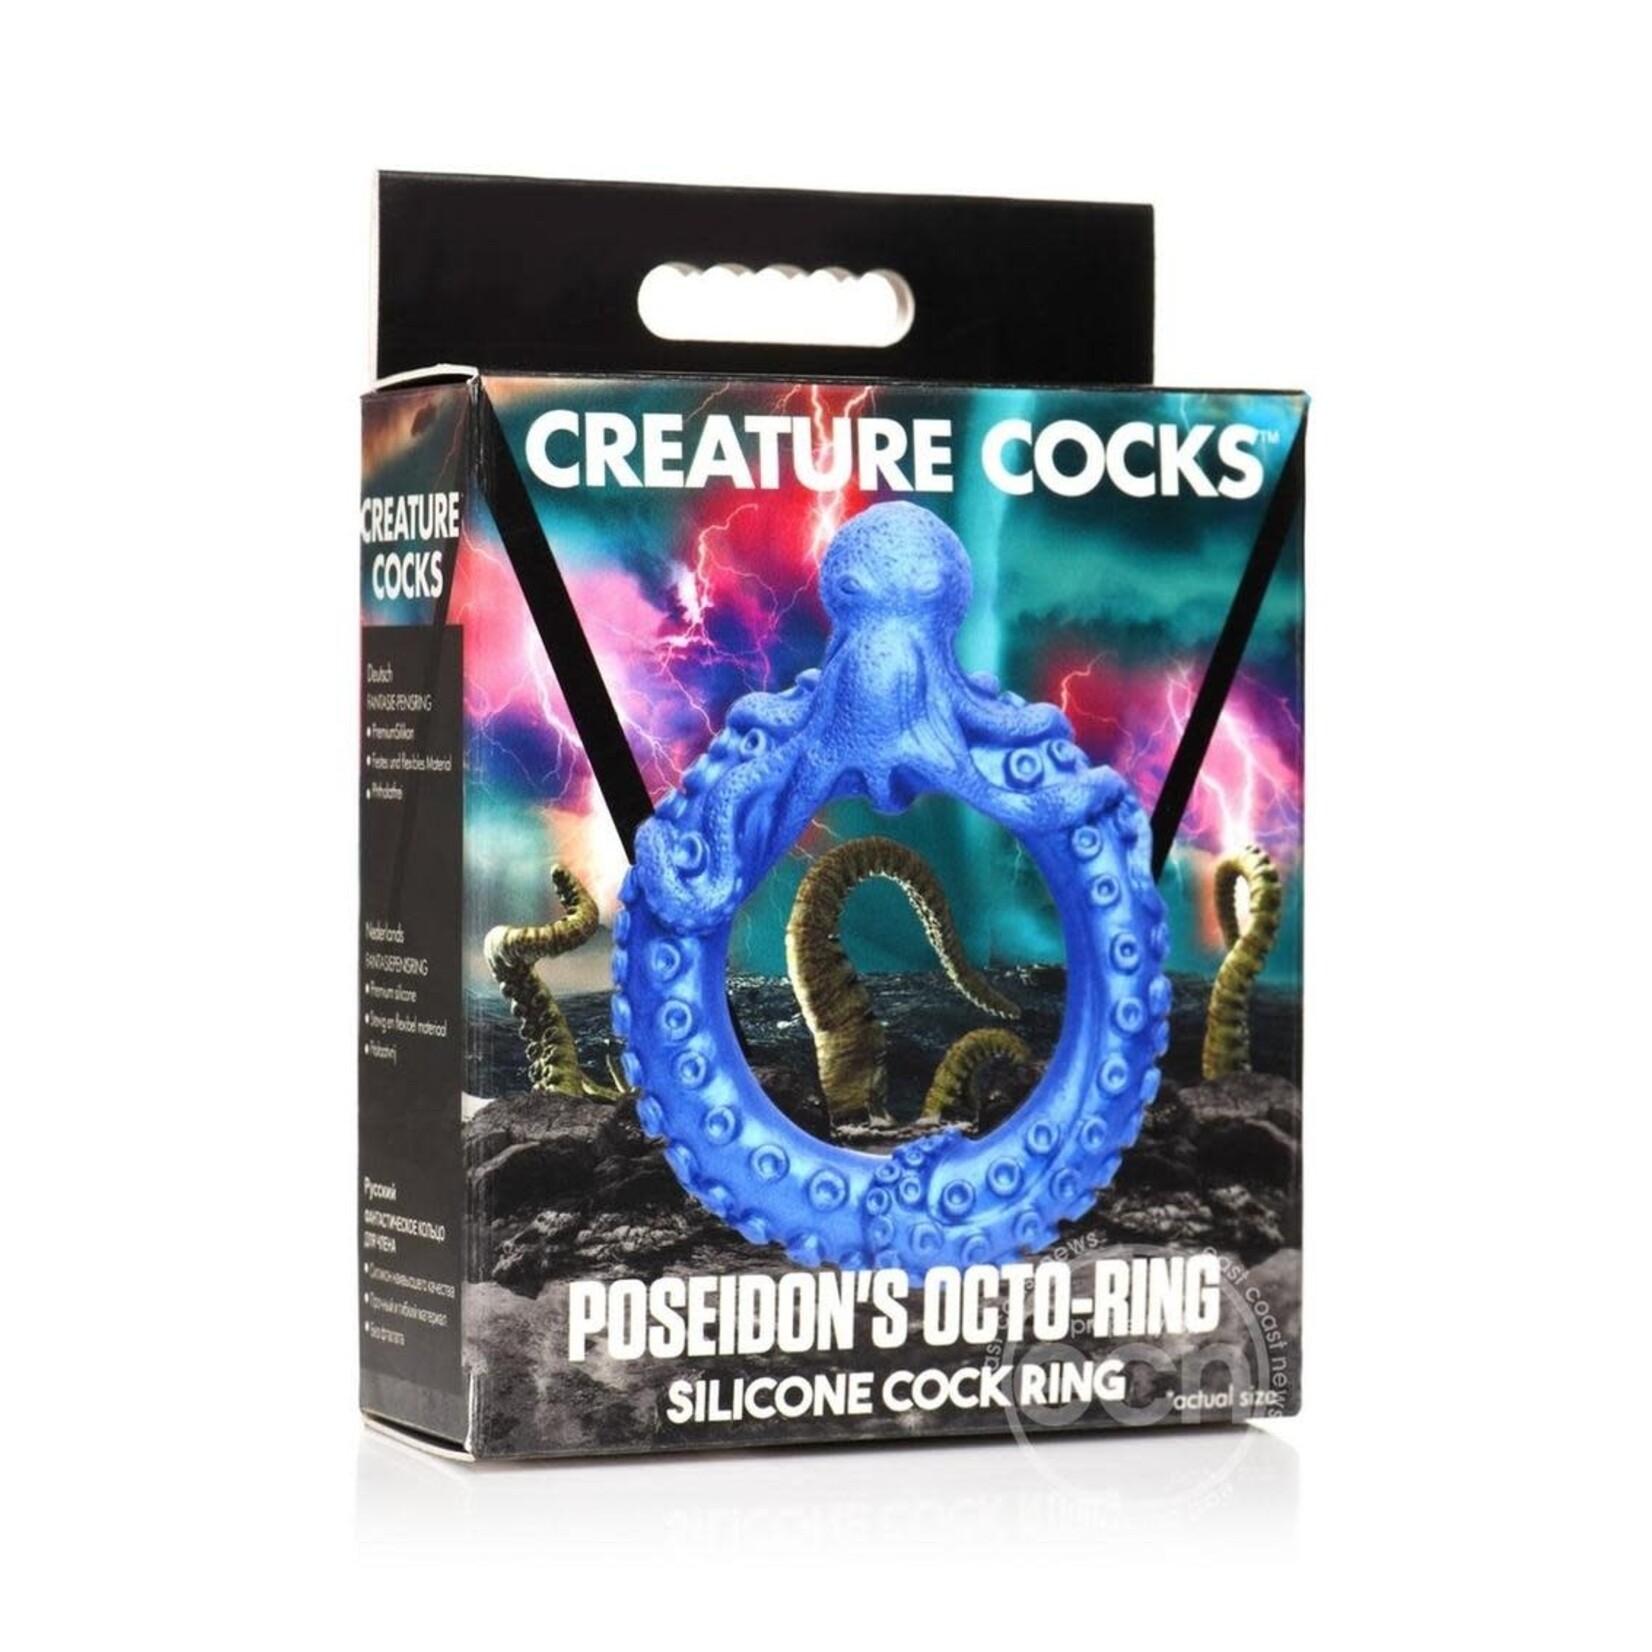 Creature Cocks Poseidon's Octo-Ring Silicone Cock Ring - Blue